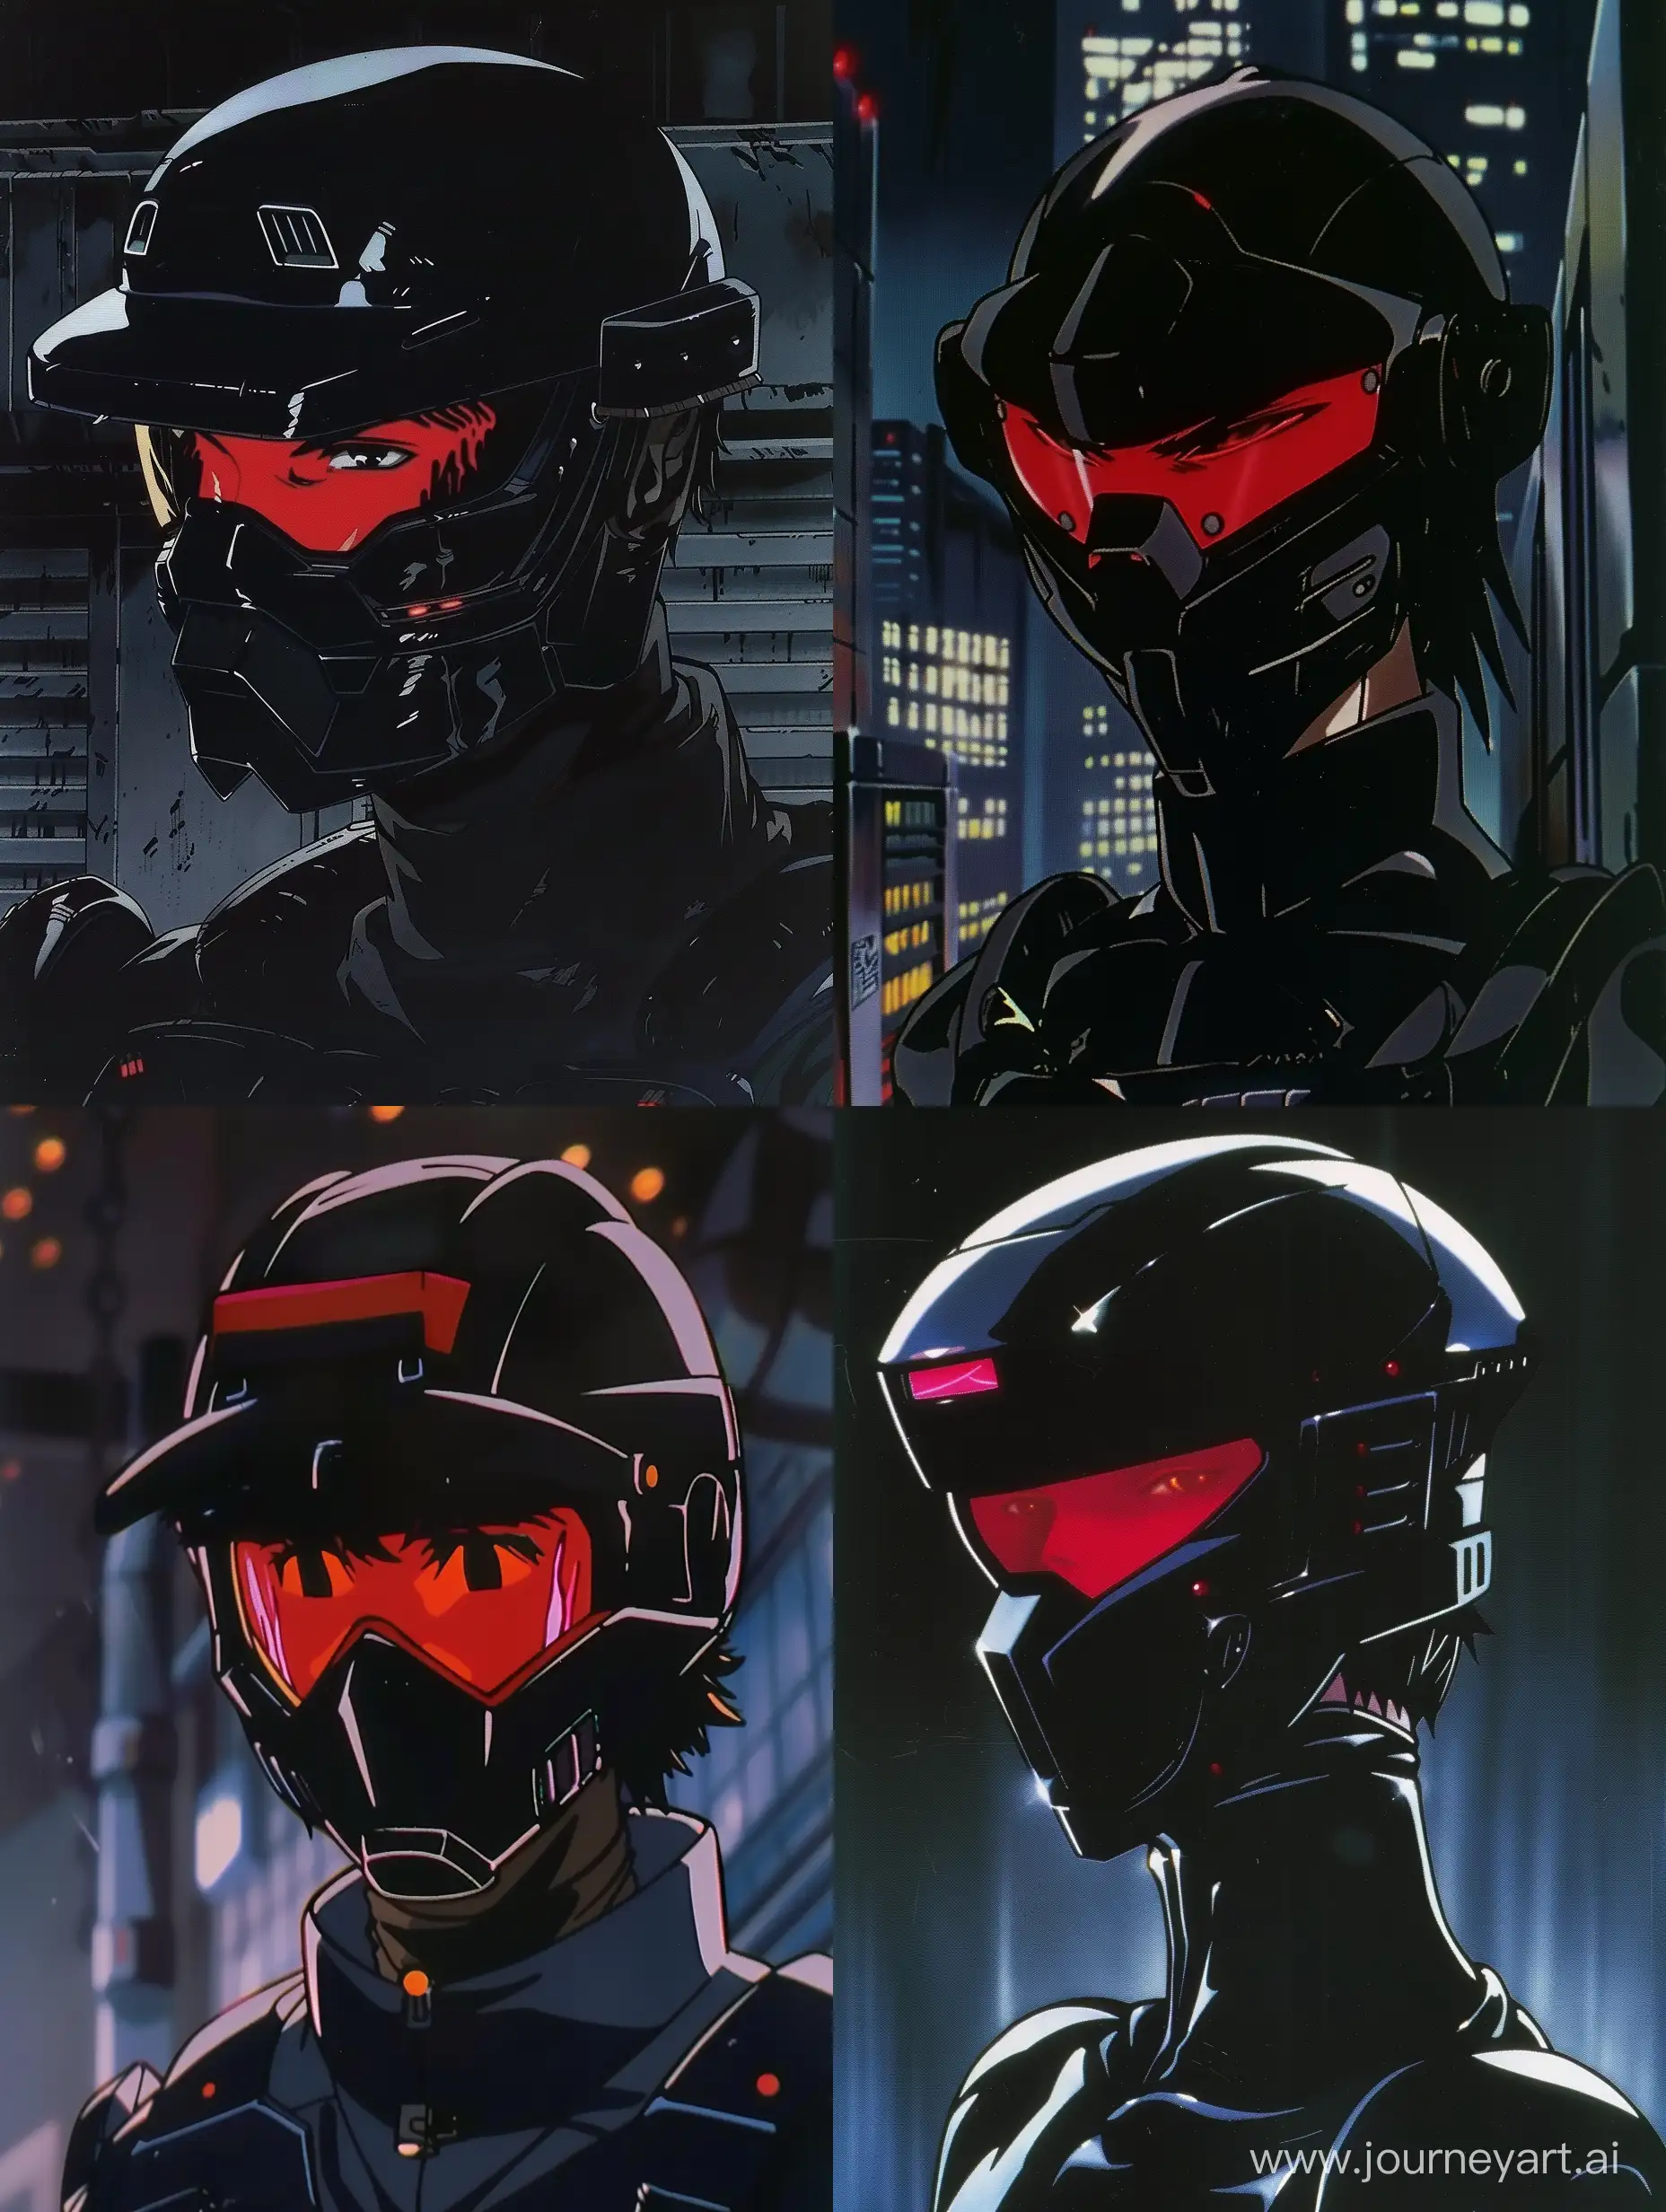 Dark-Future-Anime-Scene-Cyberpunk-Character-with-Black-Mask-and-Red-Visor